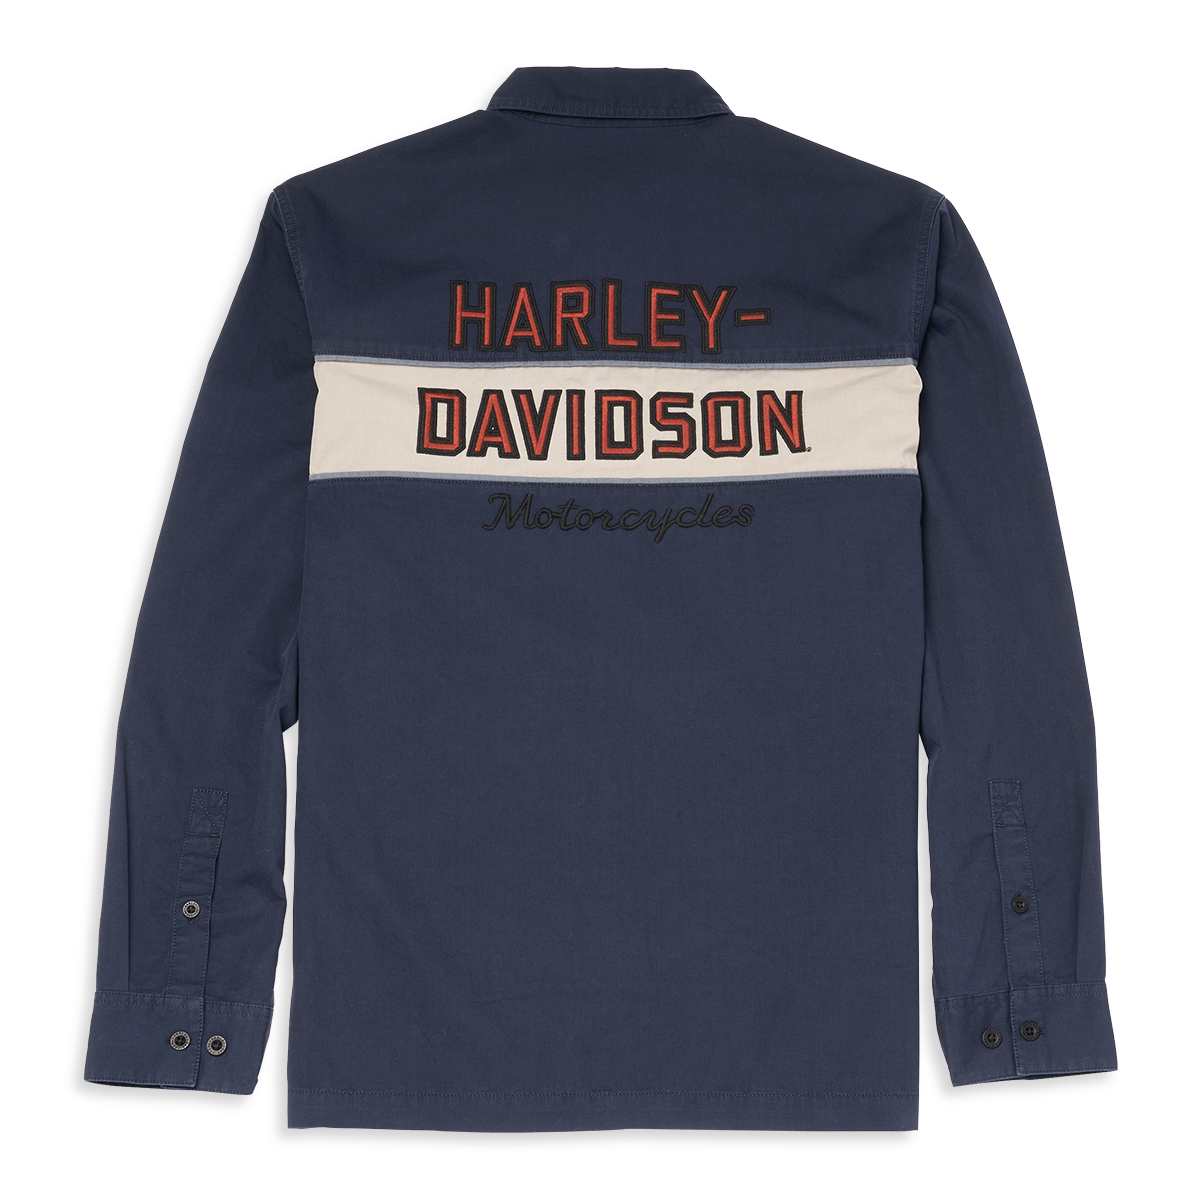 Harley-Davidson Arched Graphic Colourblock Men's Mechanics Shirt